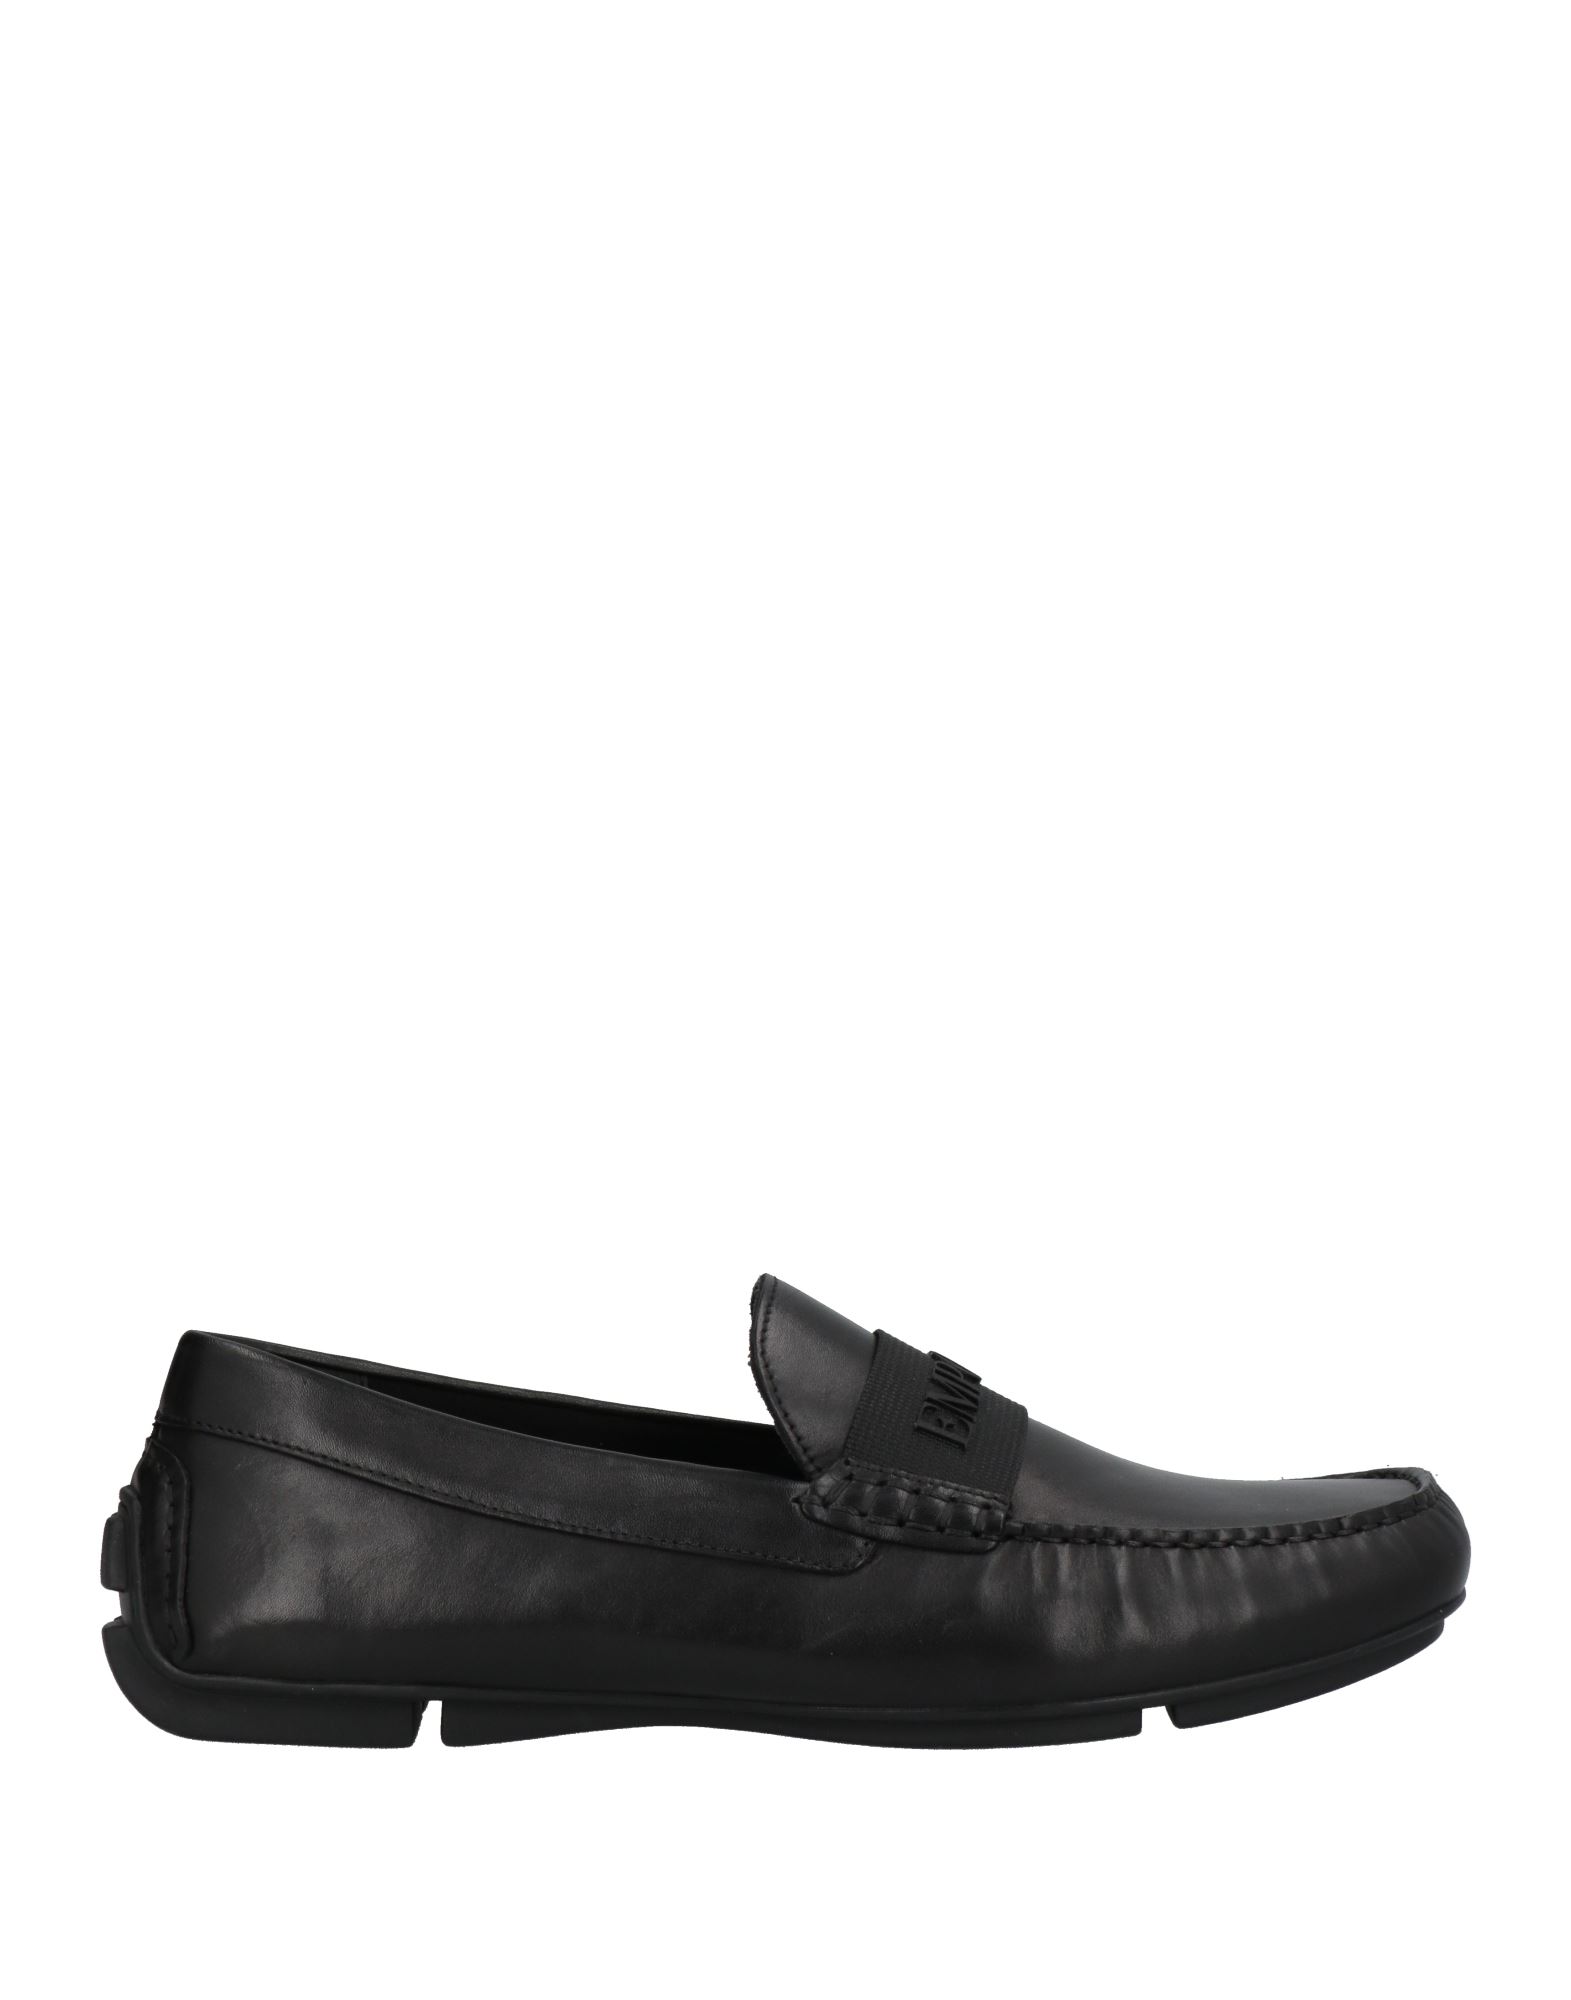 EMPORIO ARMANI Loafers for Men | ModeSens